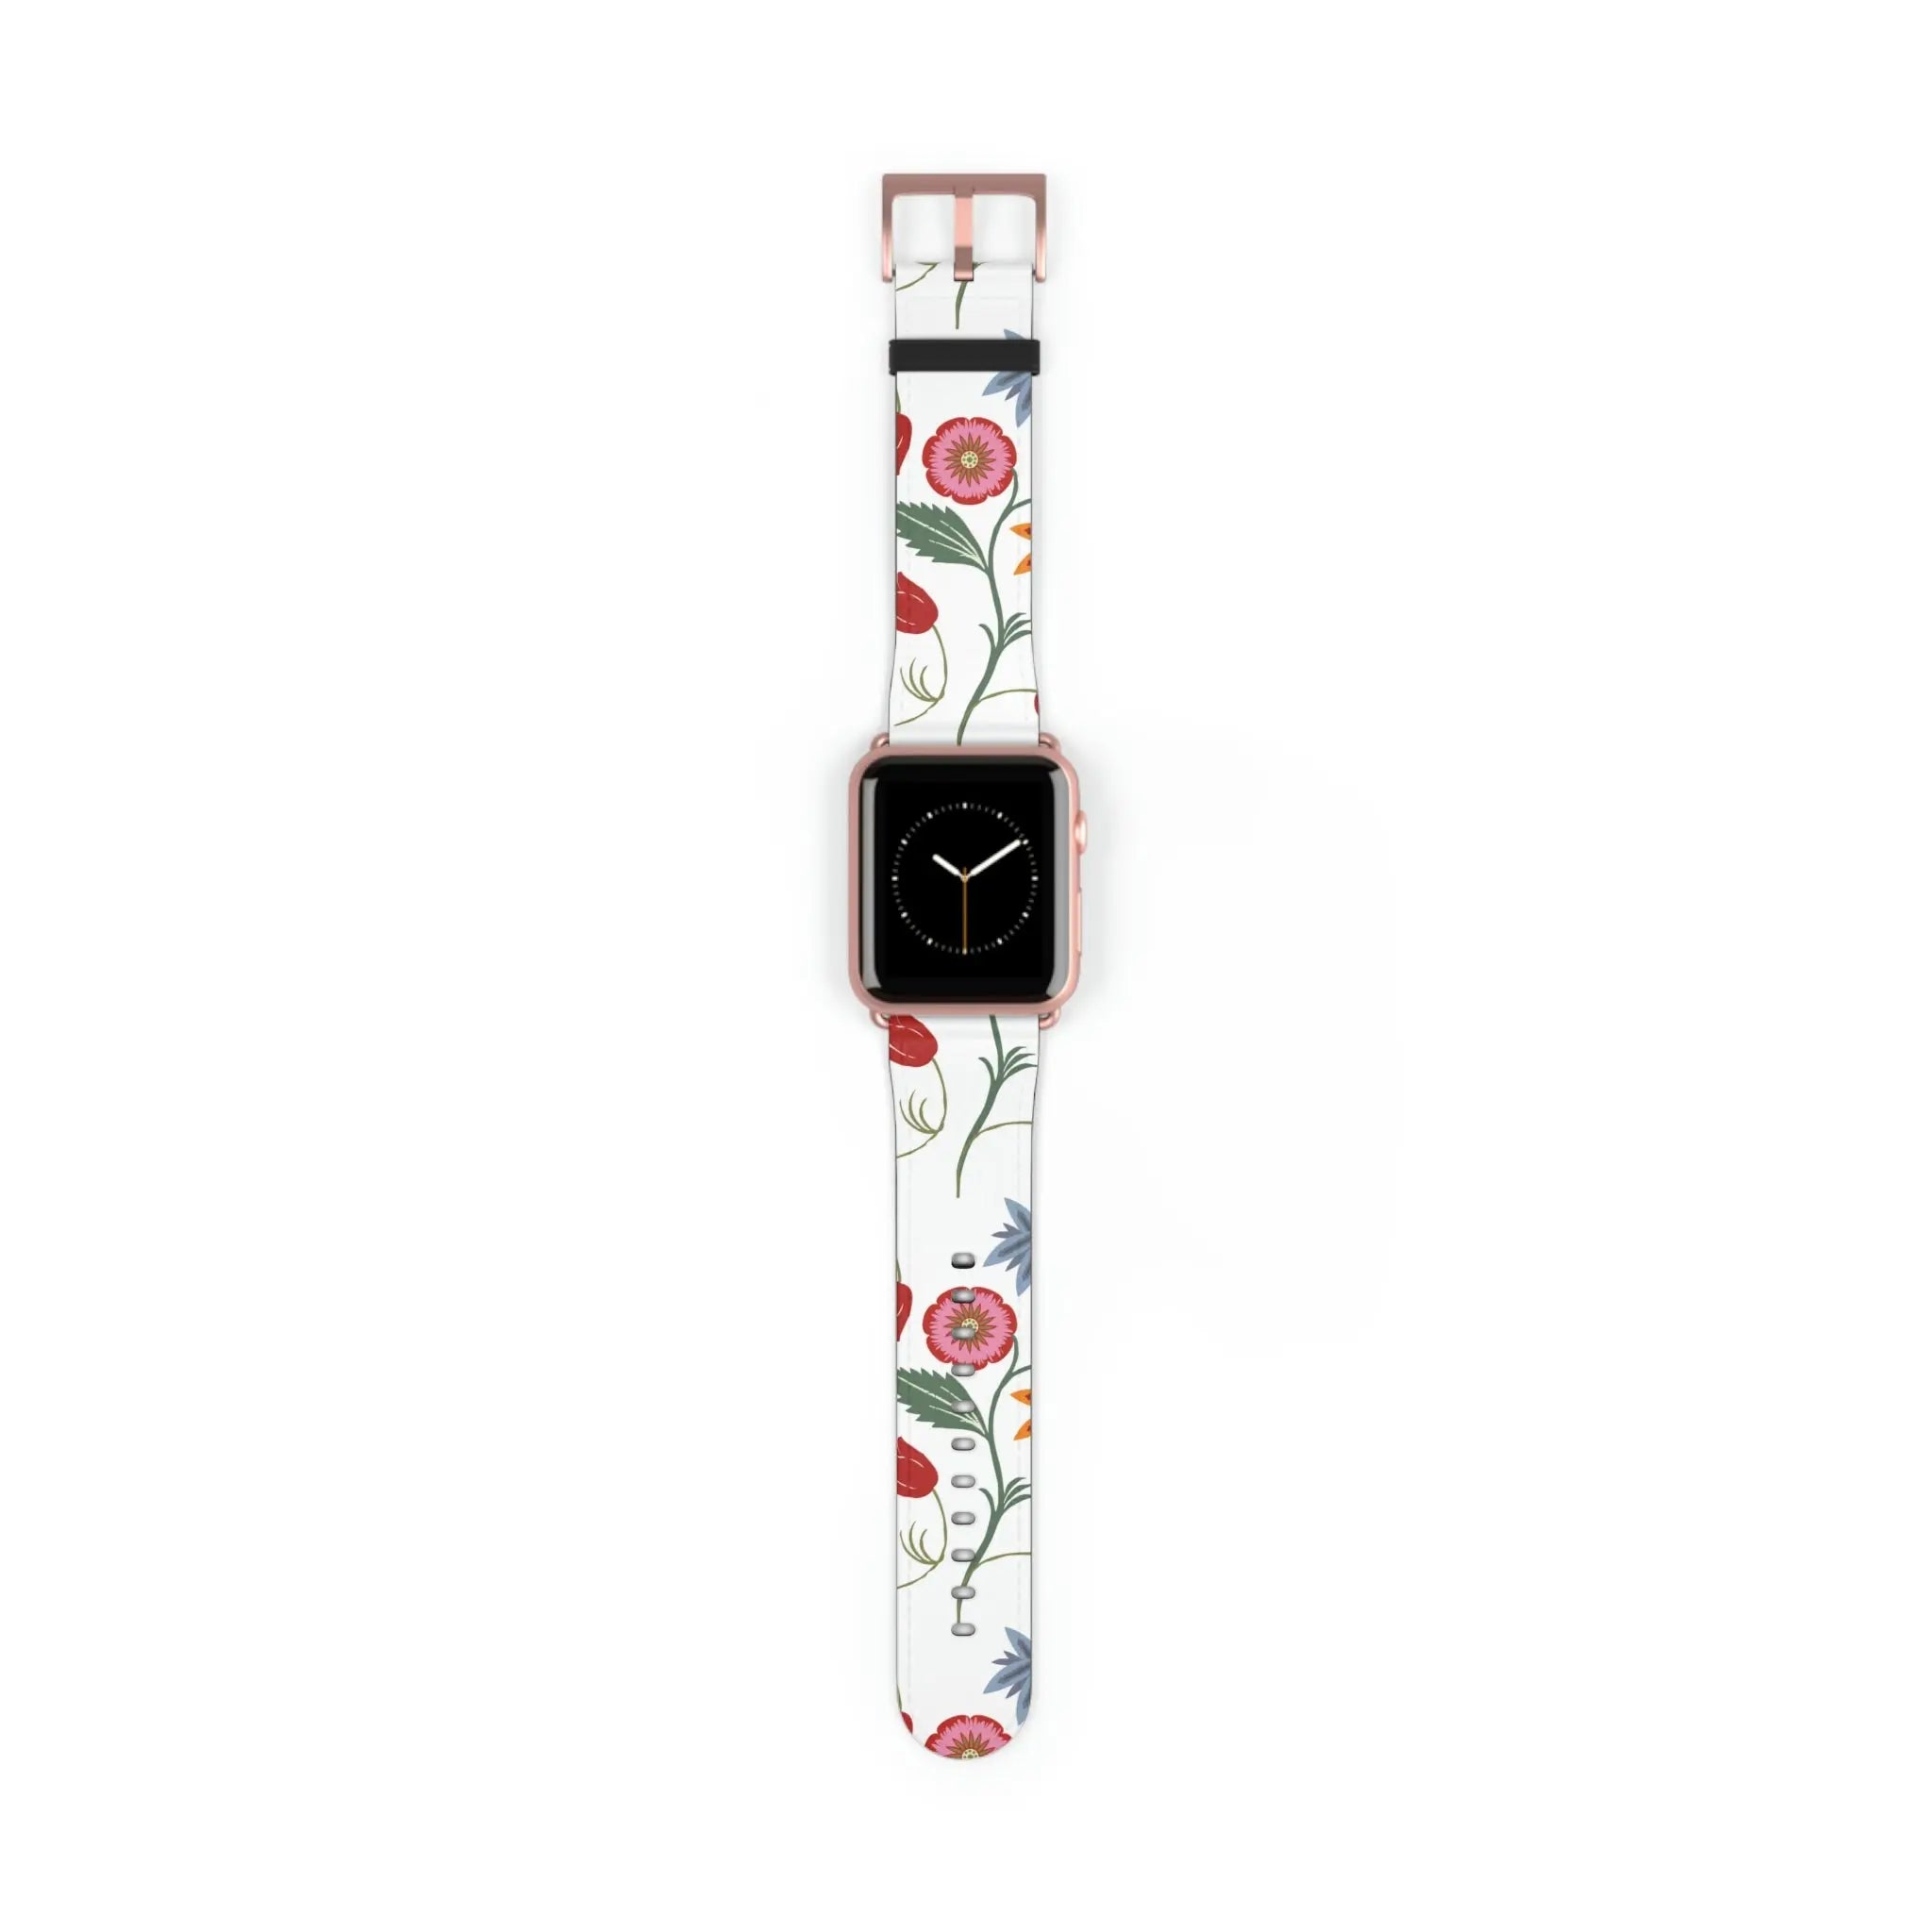  Just Bloom (Wild Flowers) Watch Band for Apple Watch Watch Bands42-45mmRoseGoldMatte